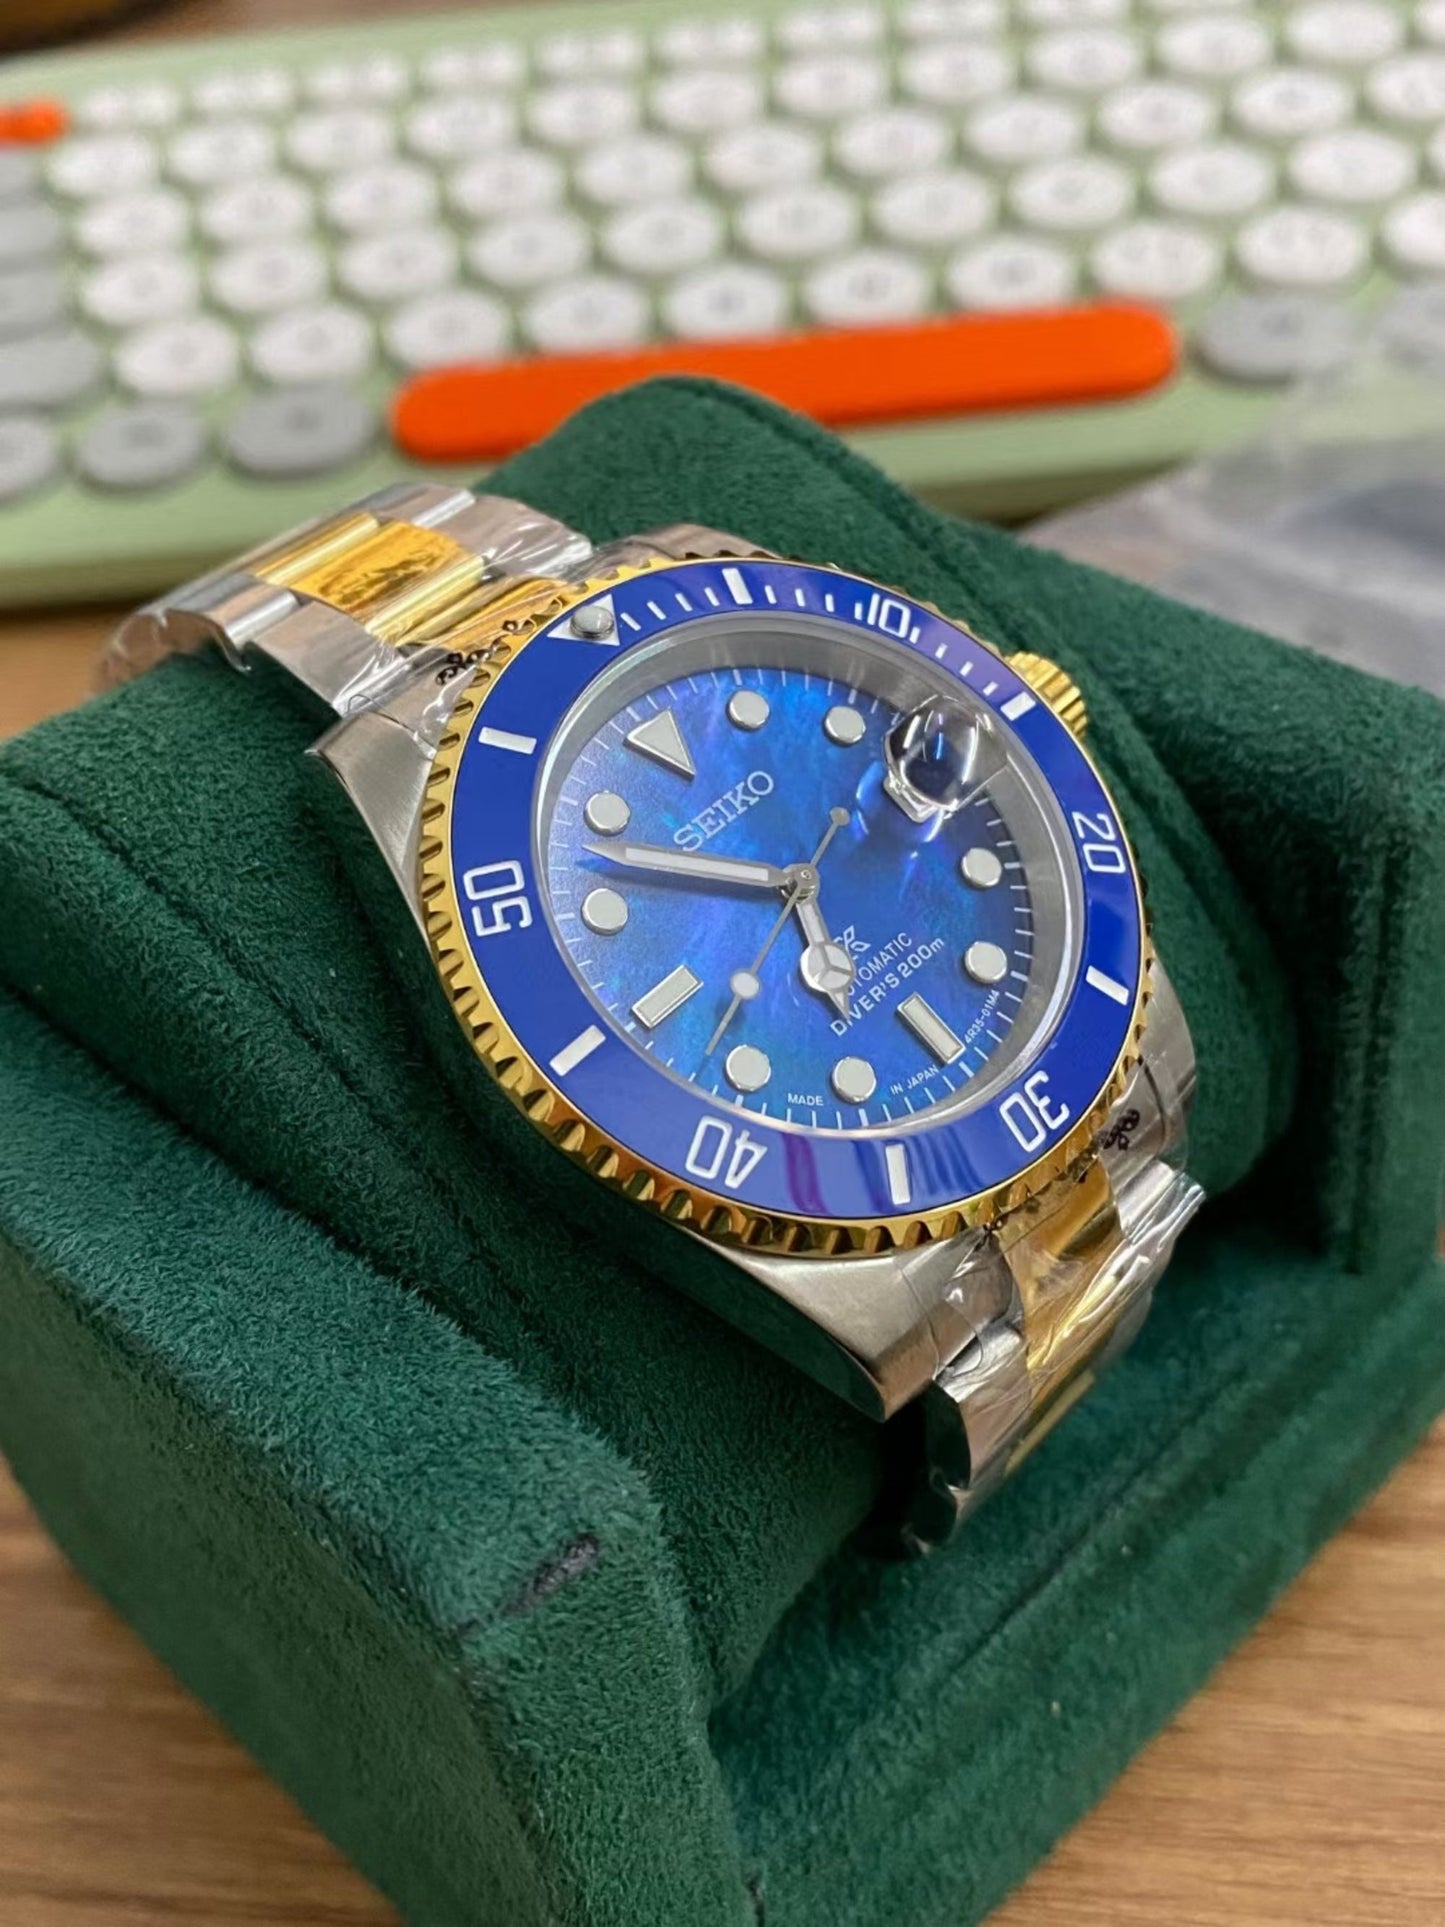 Seiko Blue Royal Submariner Mod Watch 40mm Automatic Tribute │ Gold x Silver x Blue │ Seiko Submariner │ Seiko Diver │ Japanese NH35 Movement Watch SKX │ Sunburst Dial